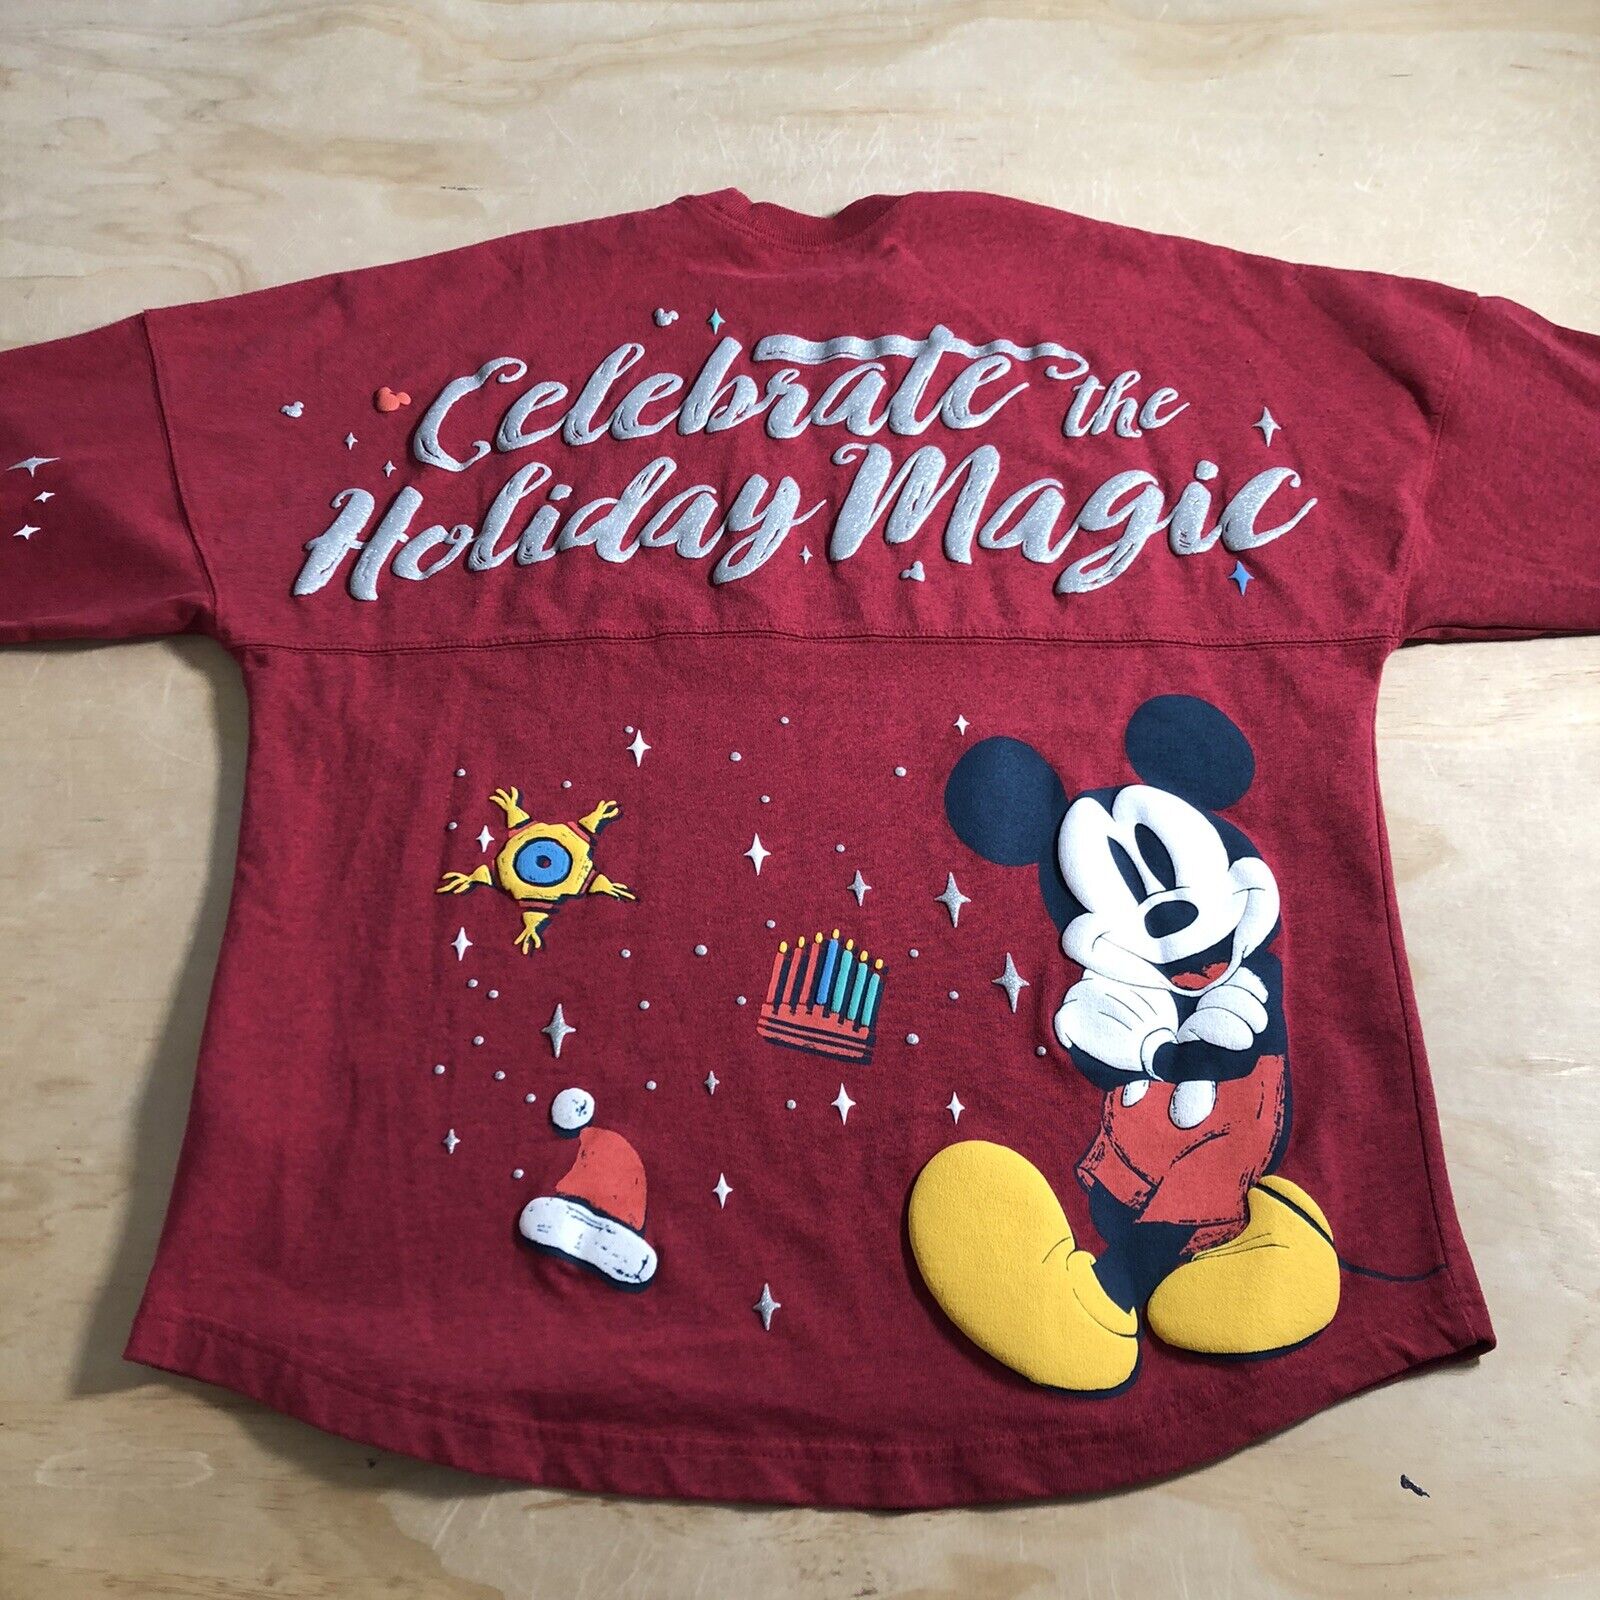 A1410 Disney California Adventure Holiday Magic Spirit Jersey 2021 Size Medium